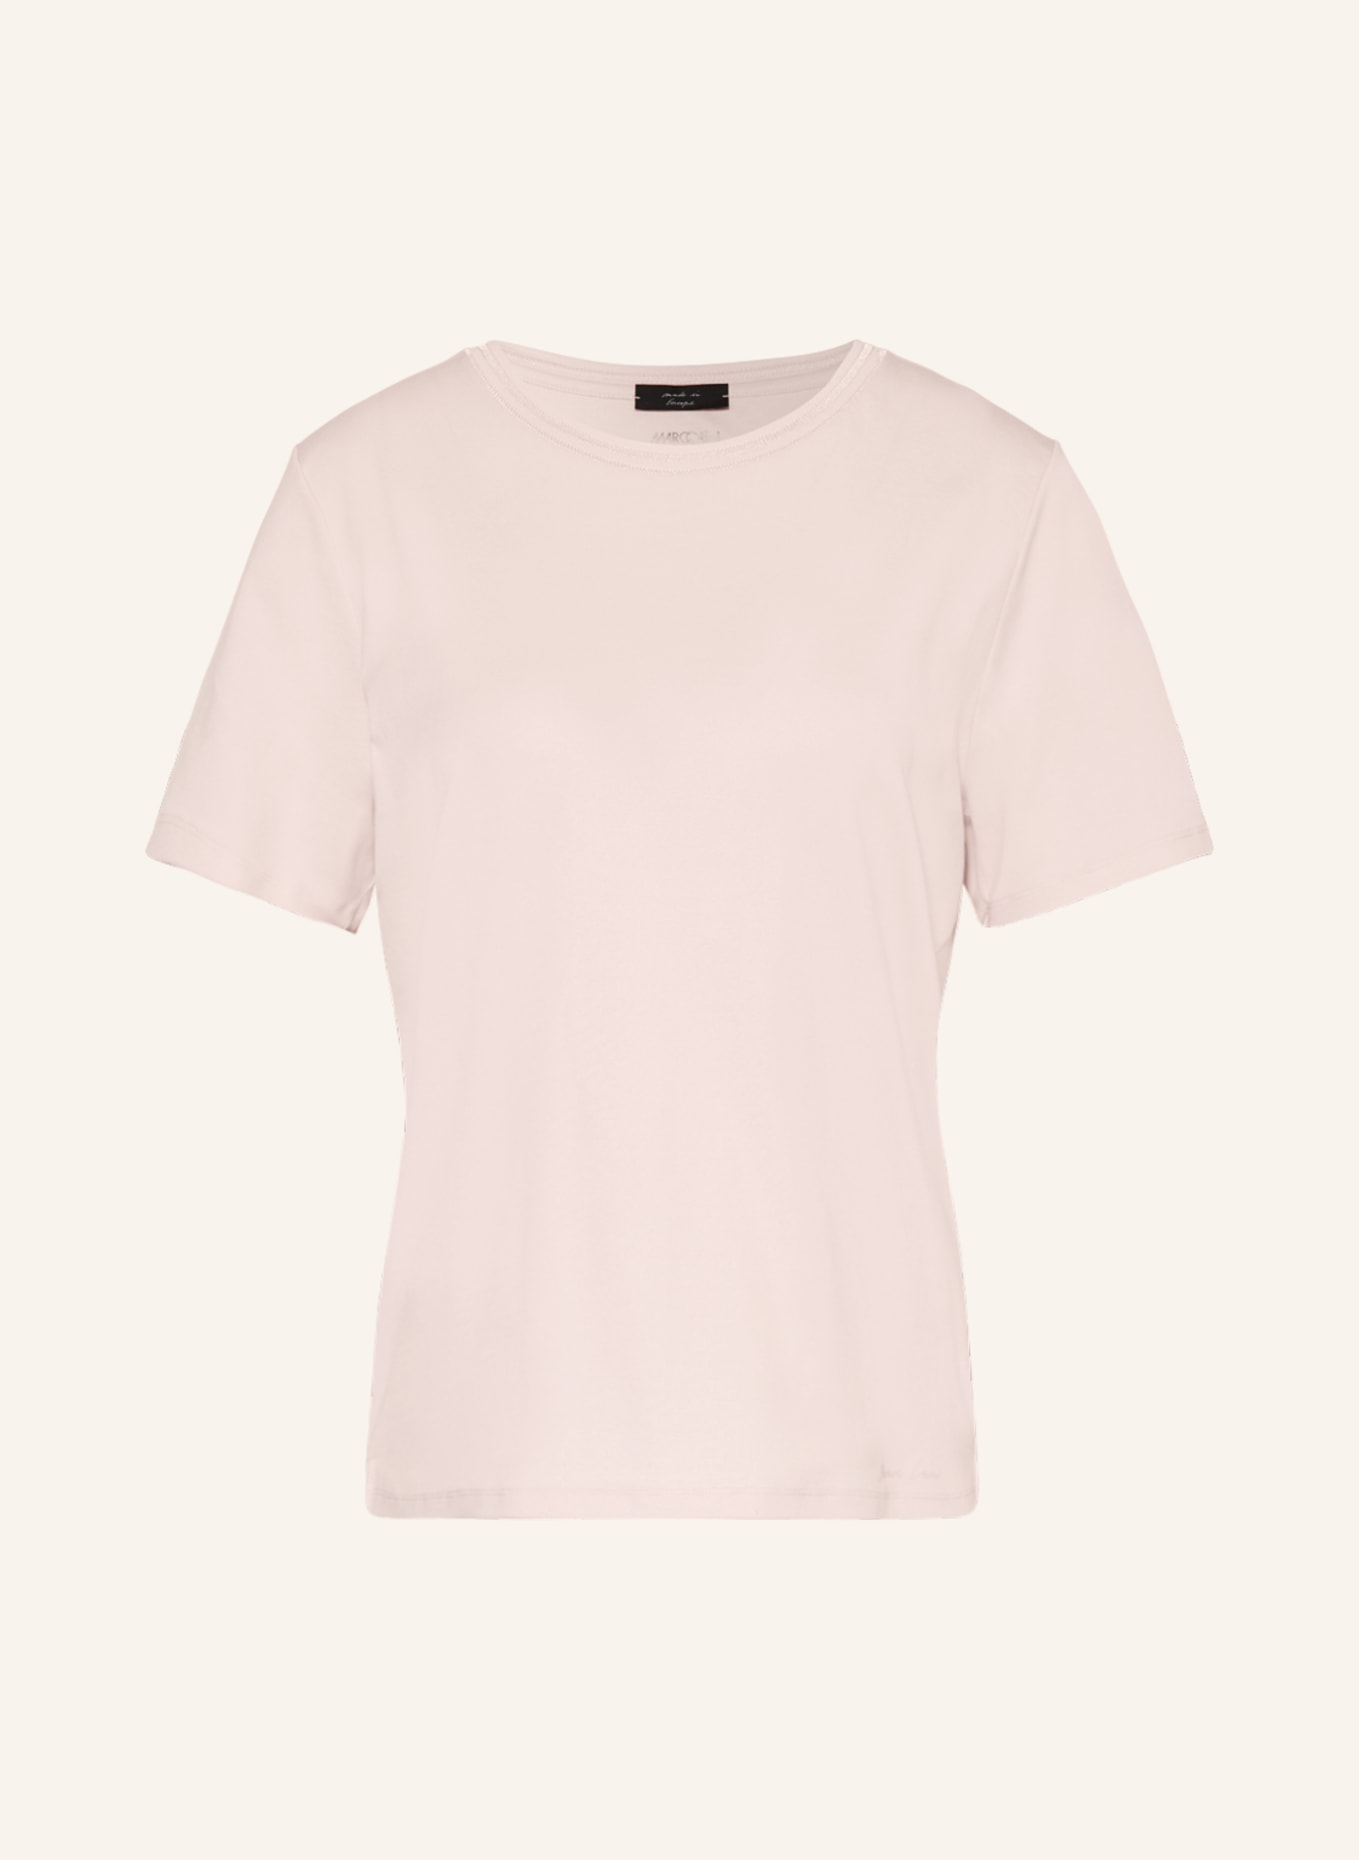 MARC CAIN T-Shirt, Farbe: 210 soft powder pink (Bild 1)